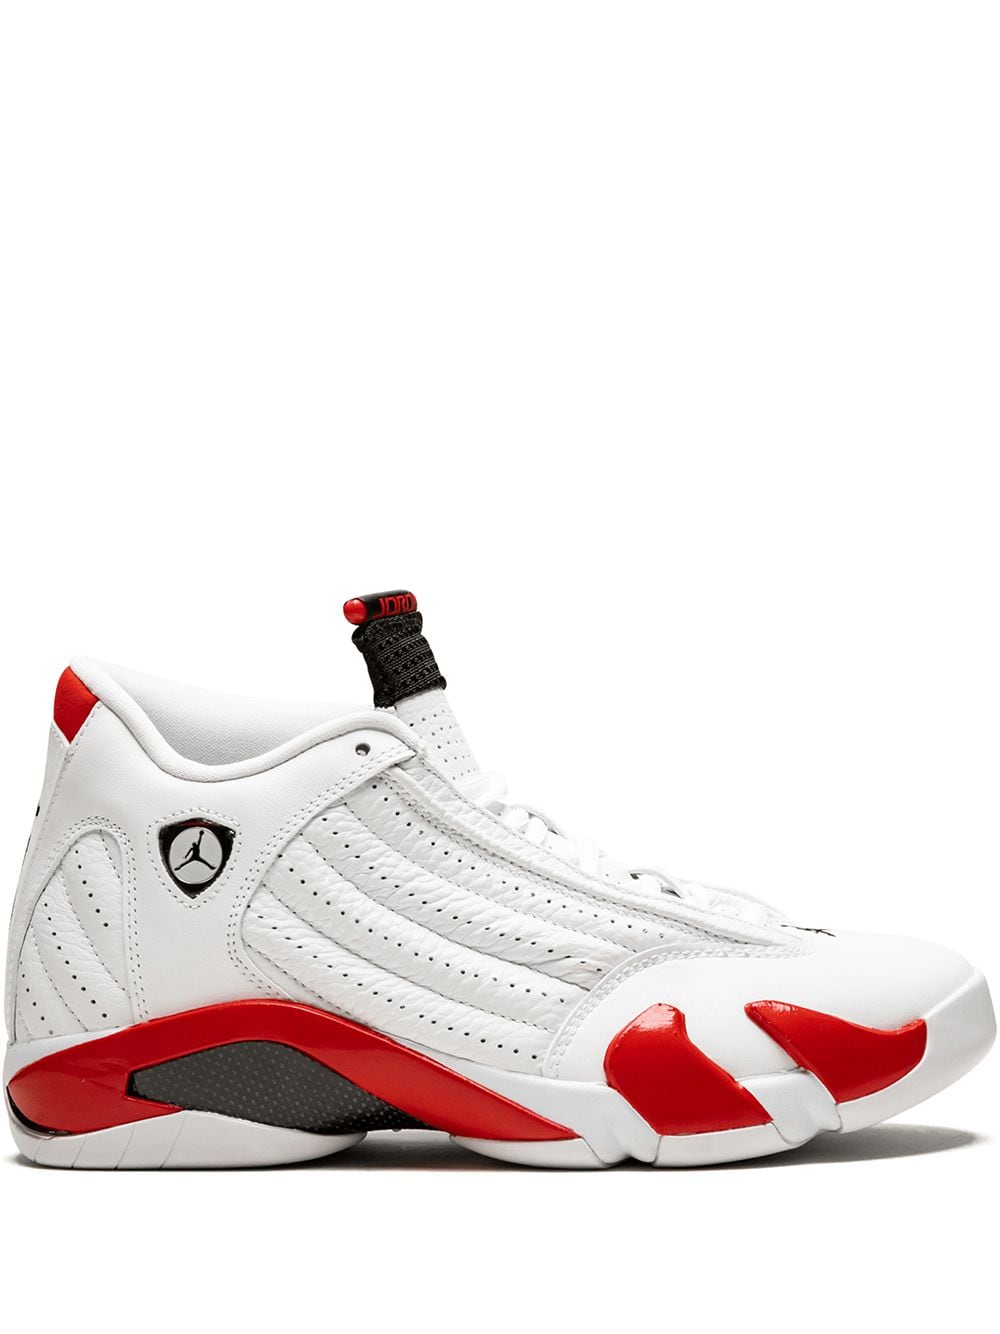 Jordan Air Jordan 14 "Candy Cane" sneakers - White